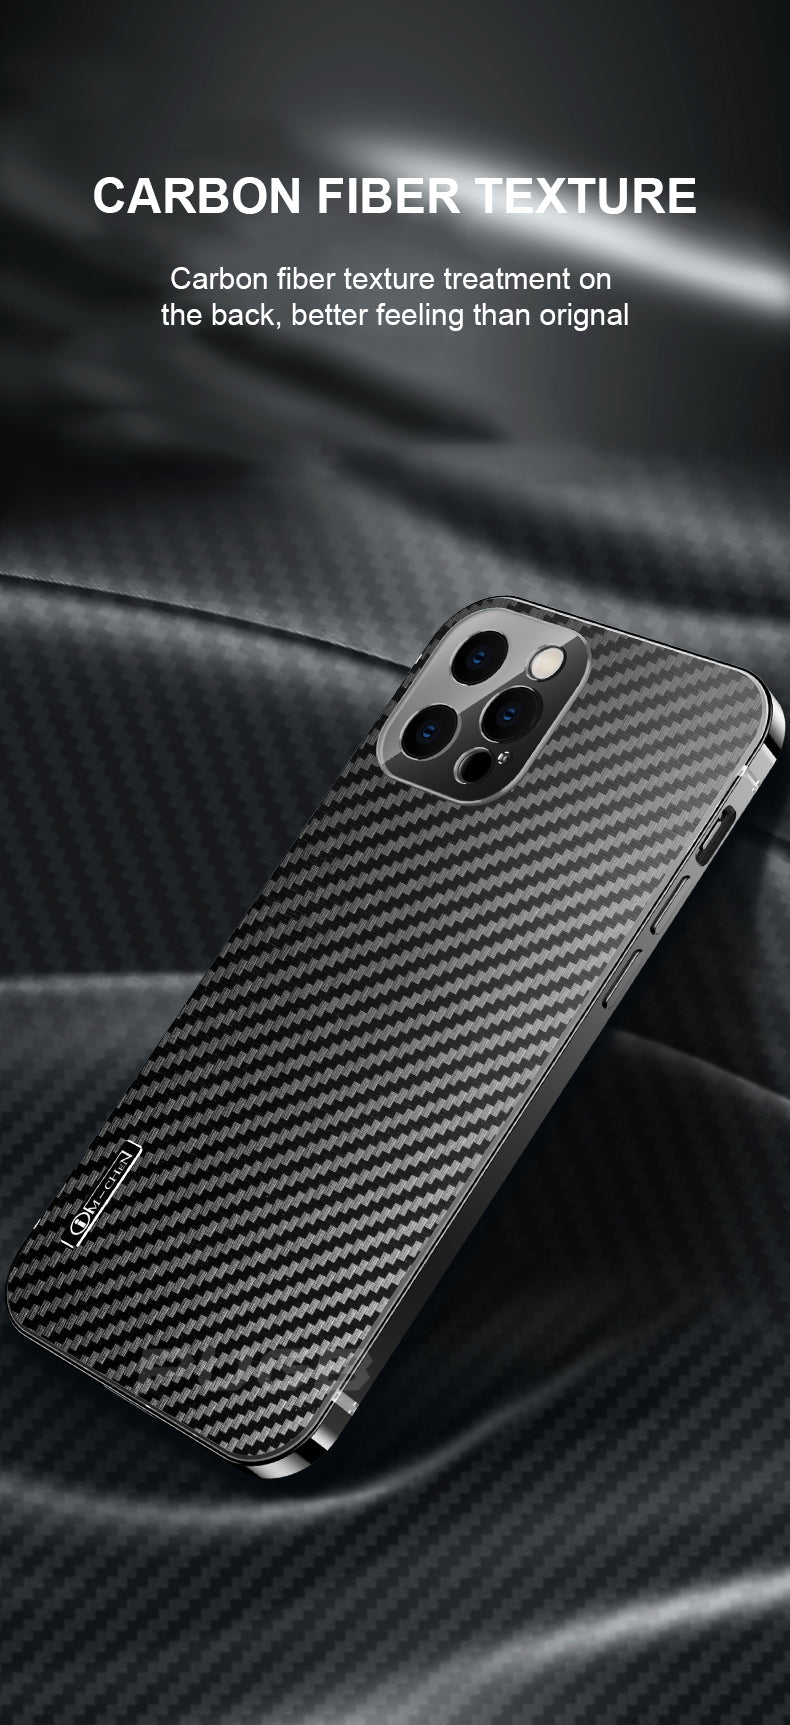 Luxury Titanium Metal Bumper Carbon Fiber Case For iPhone | Shockproof Lens Protection Cover - City2CityWorld